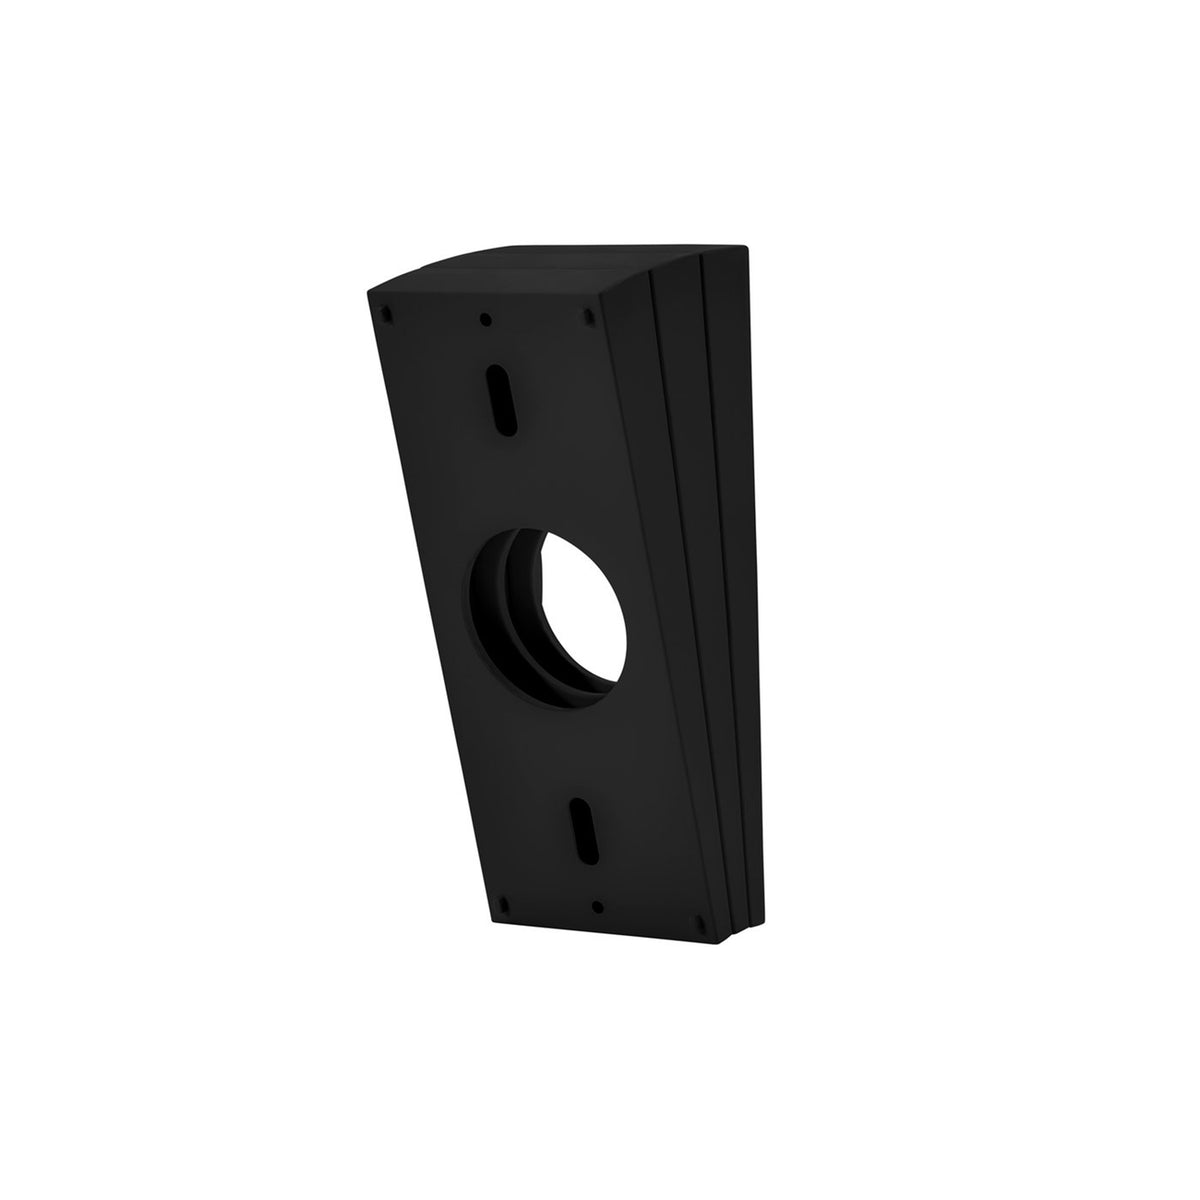 Ring Video Doorbell Pro Wedge Kit